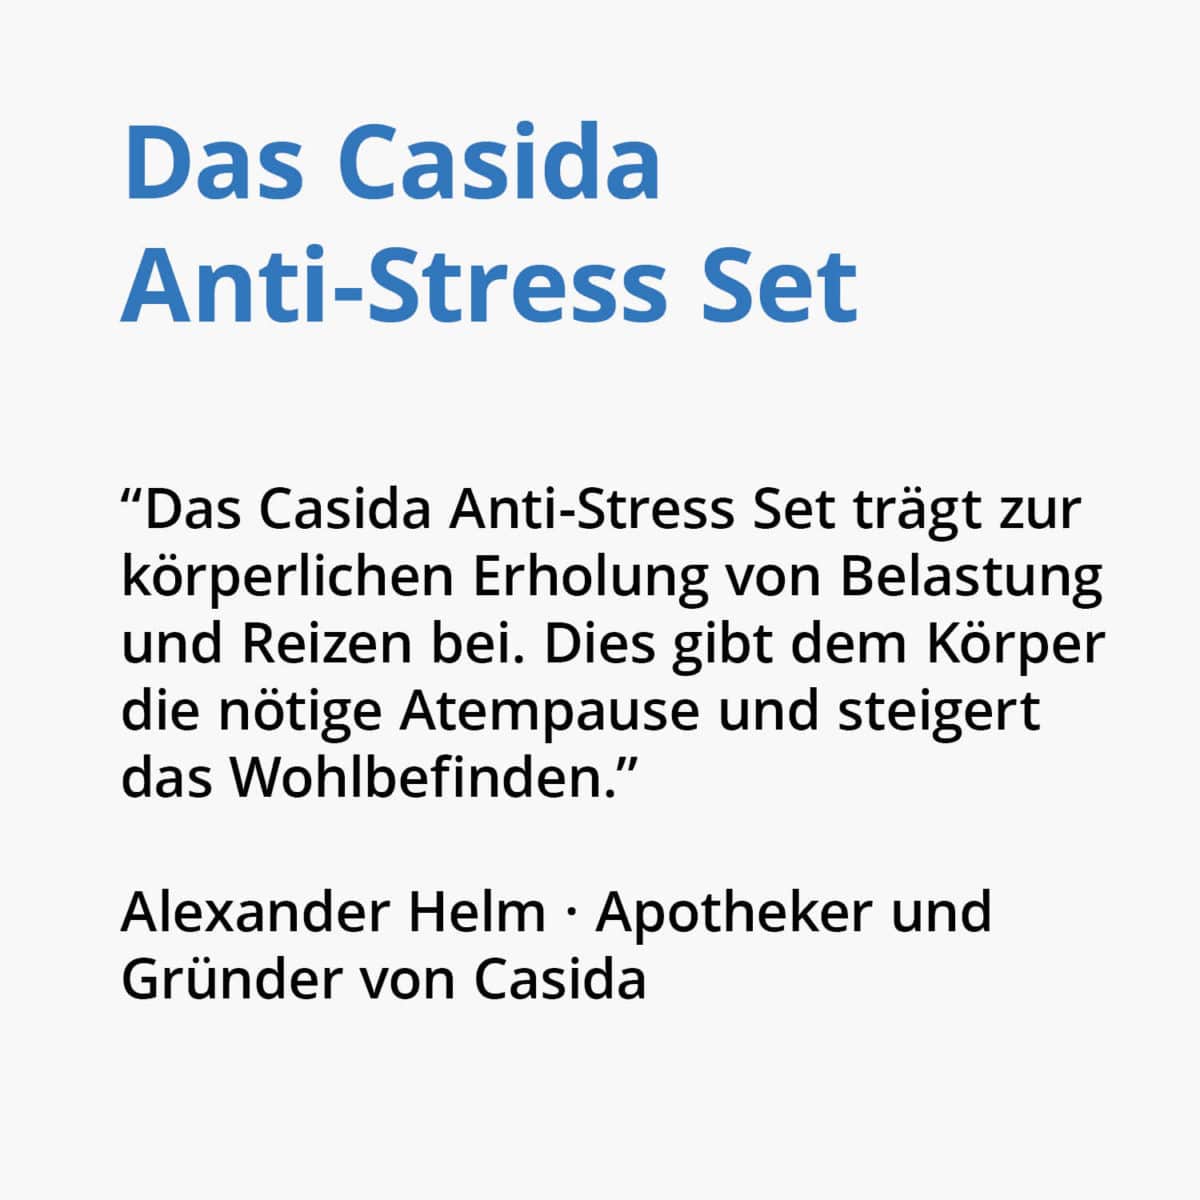 Anti-Stress Set